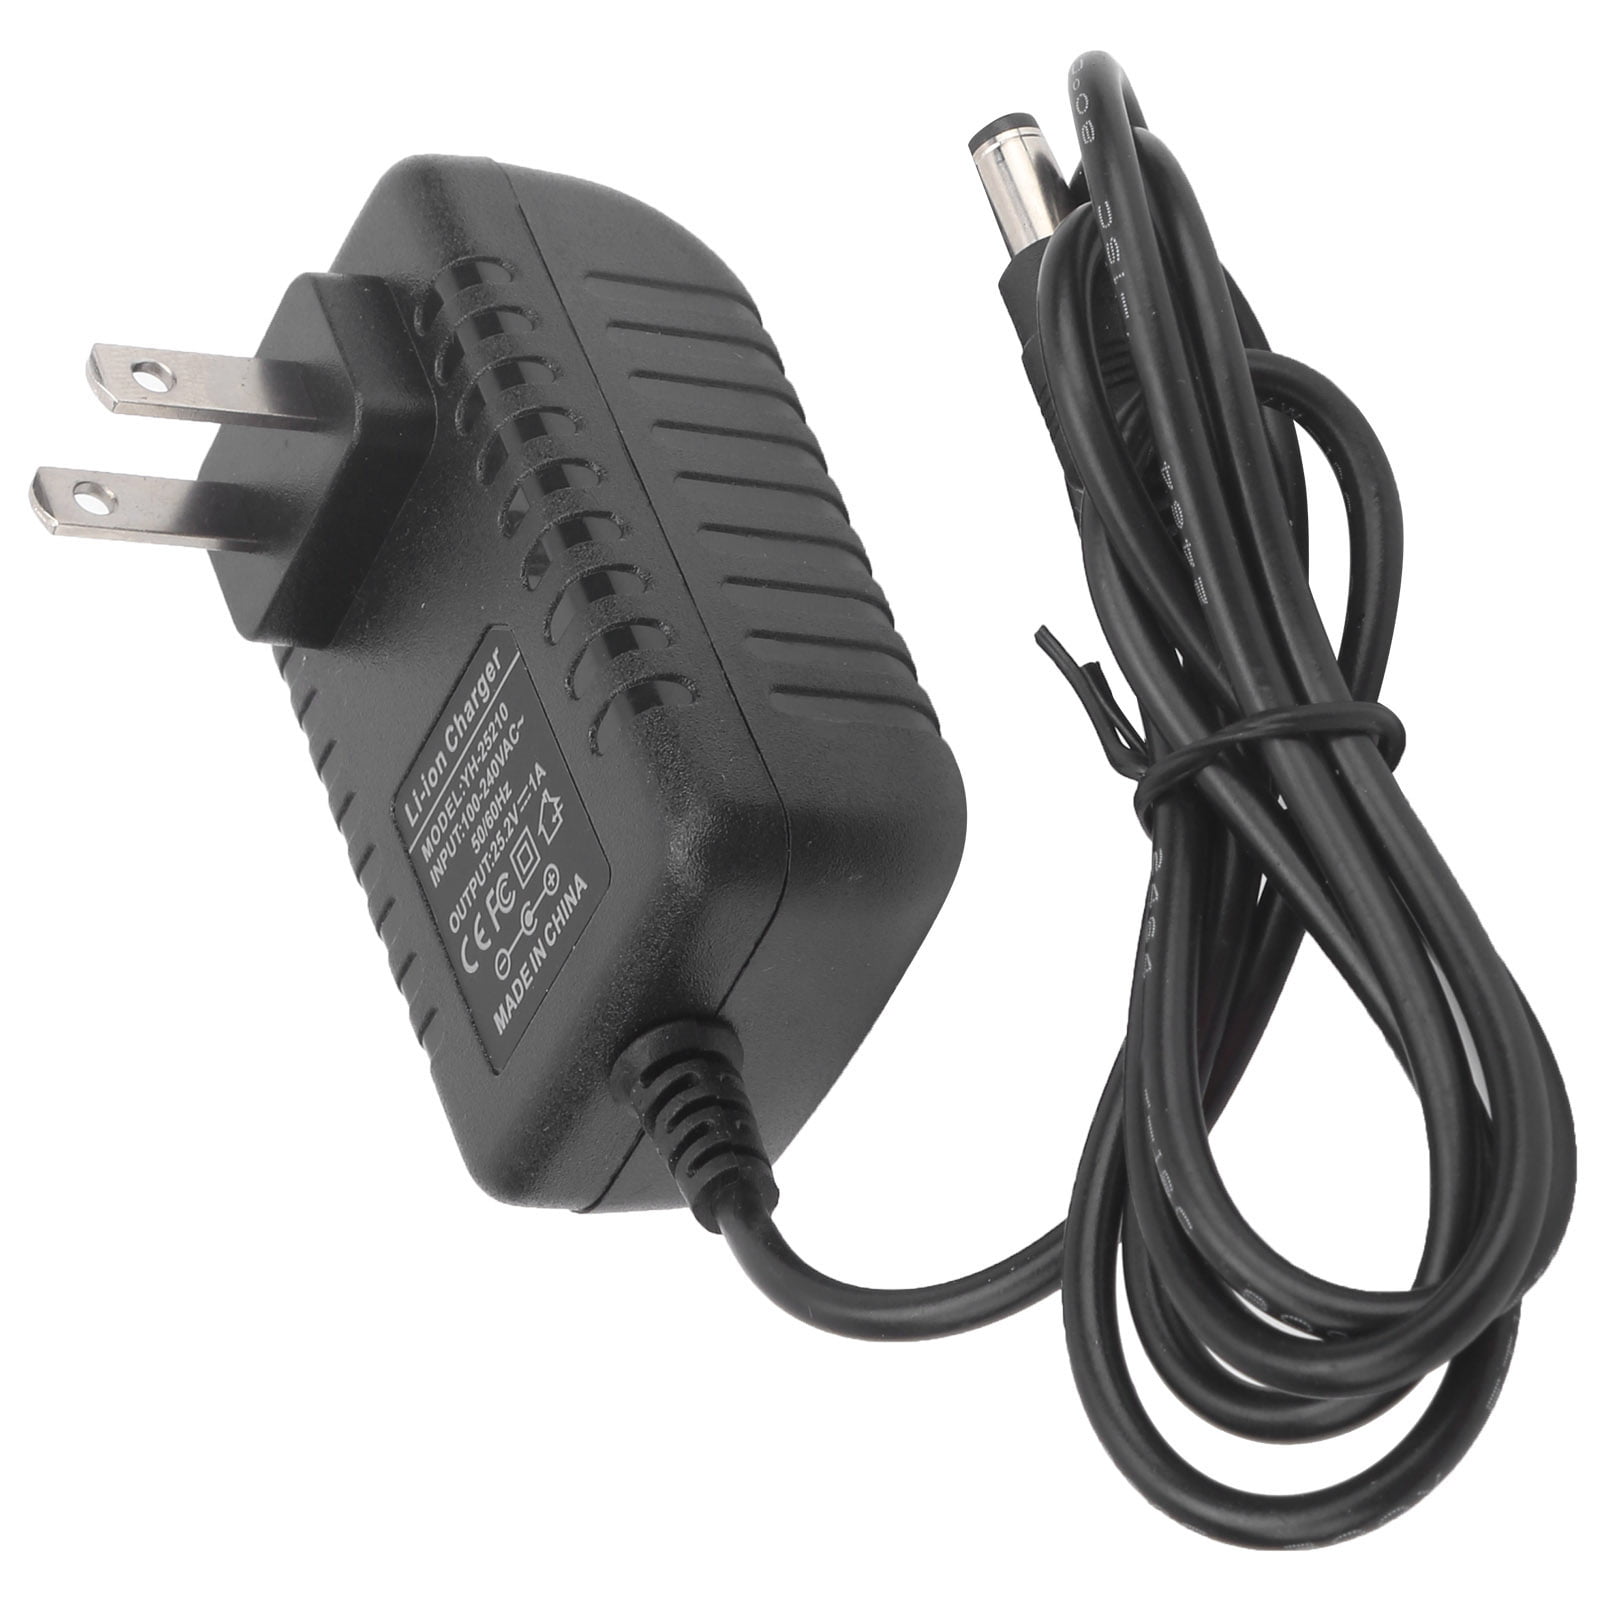 25.2V Adapter Charger For Li‑ion Battery W/Indicator Light US Plug 100‑240Vs 